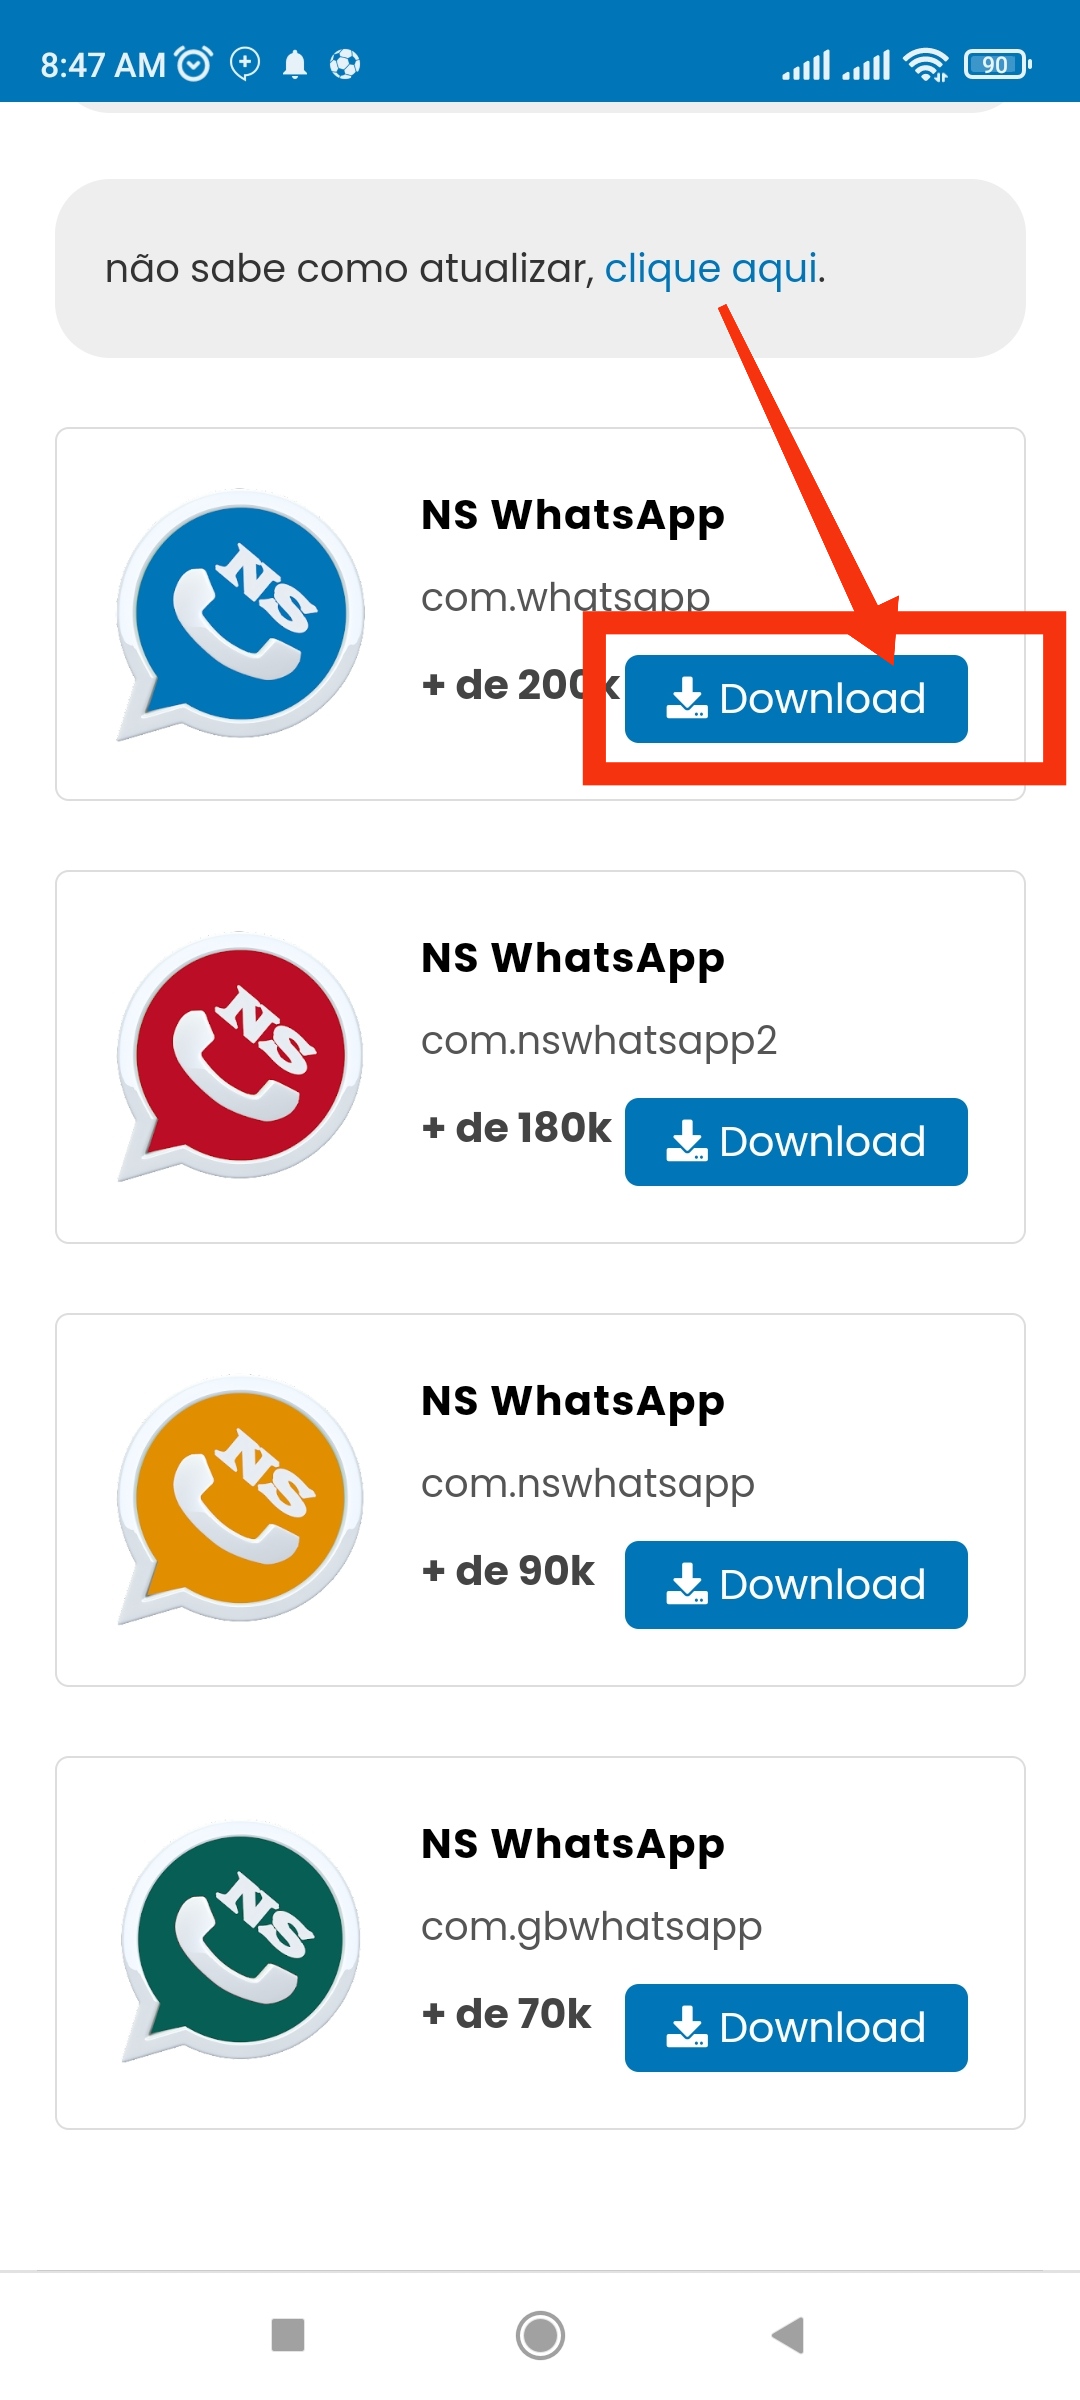 Download NS Whatsapp